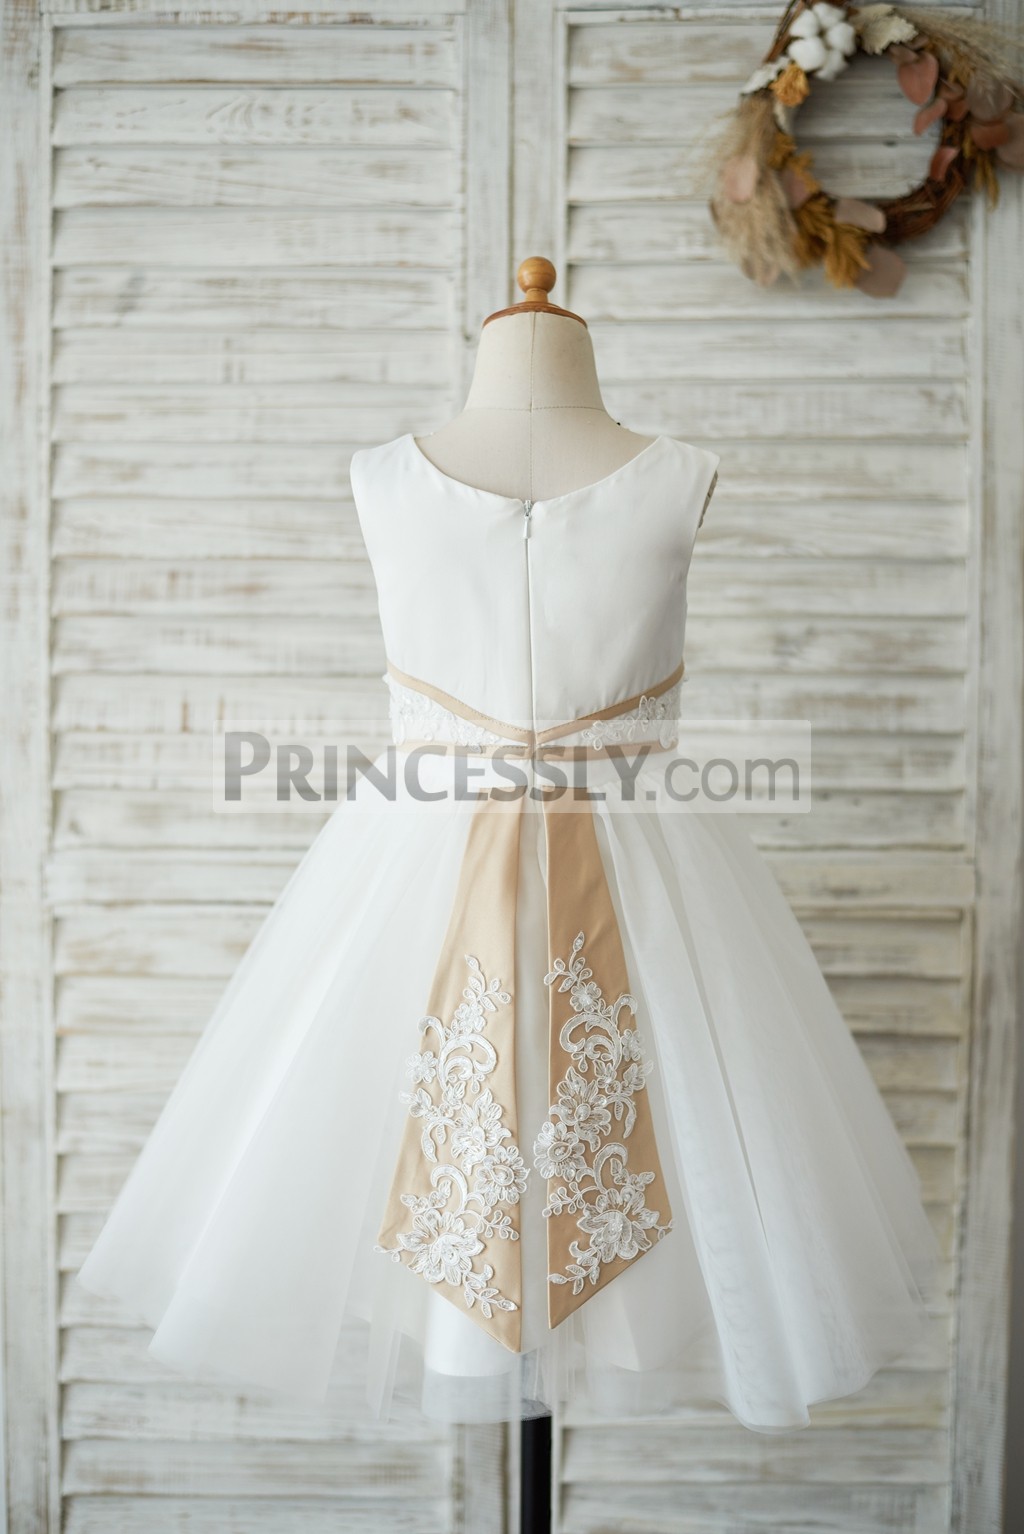 Princess ivory satin tulle wedding baby girl dress